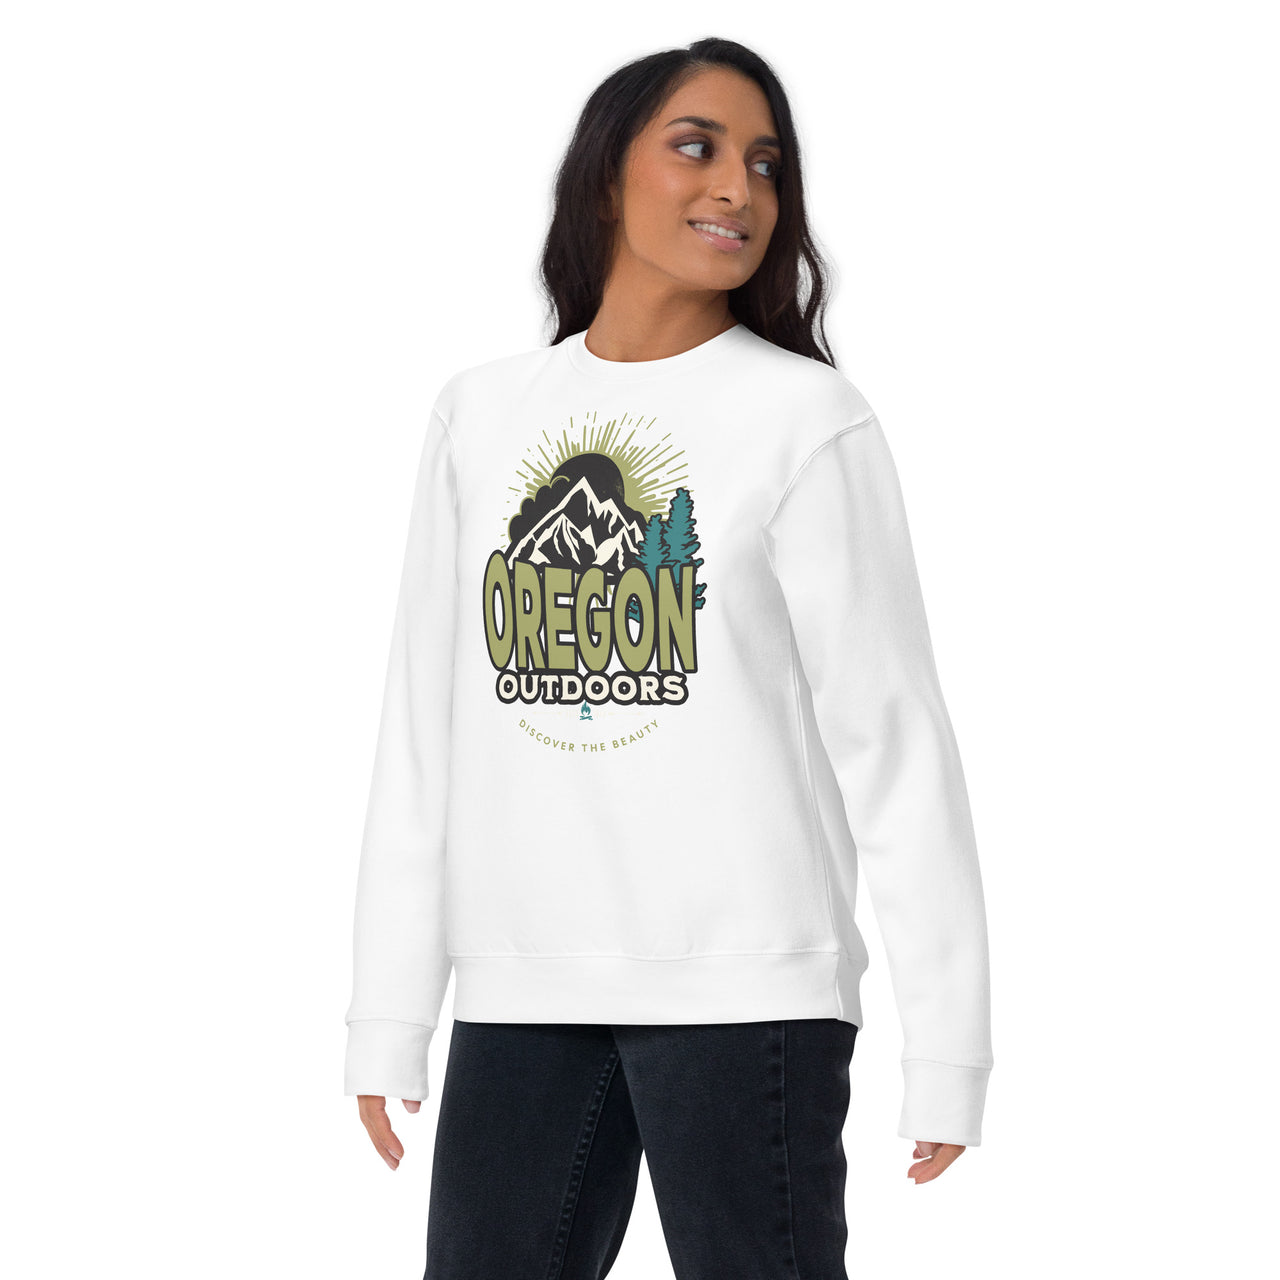 Oregon Outdoors - Unisex Premium Sweatshirt